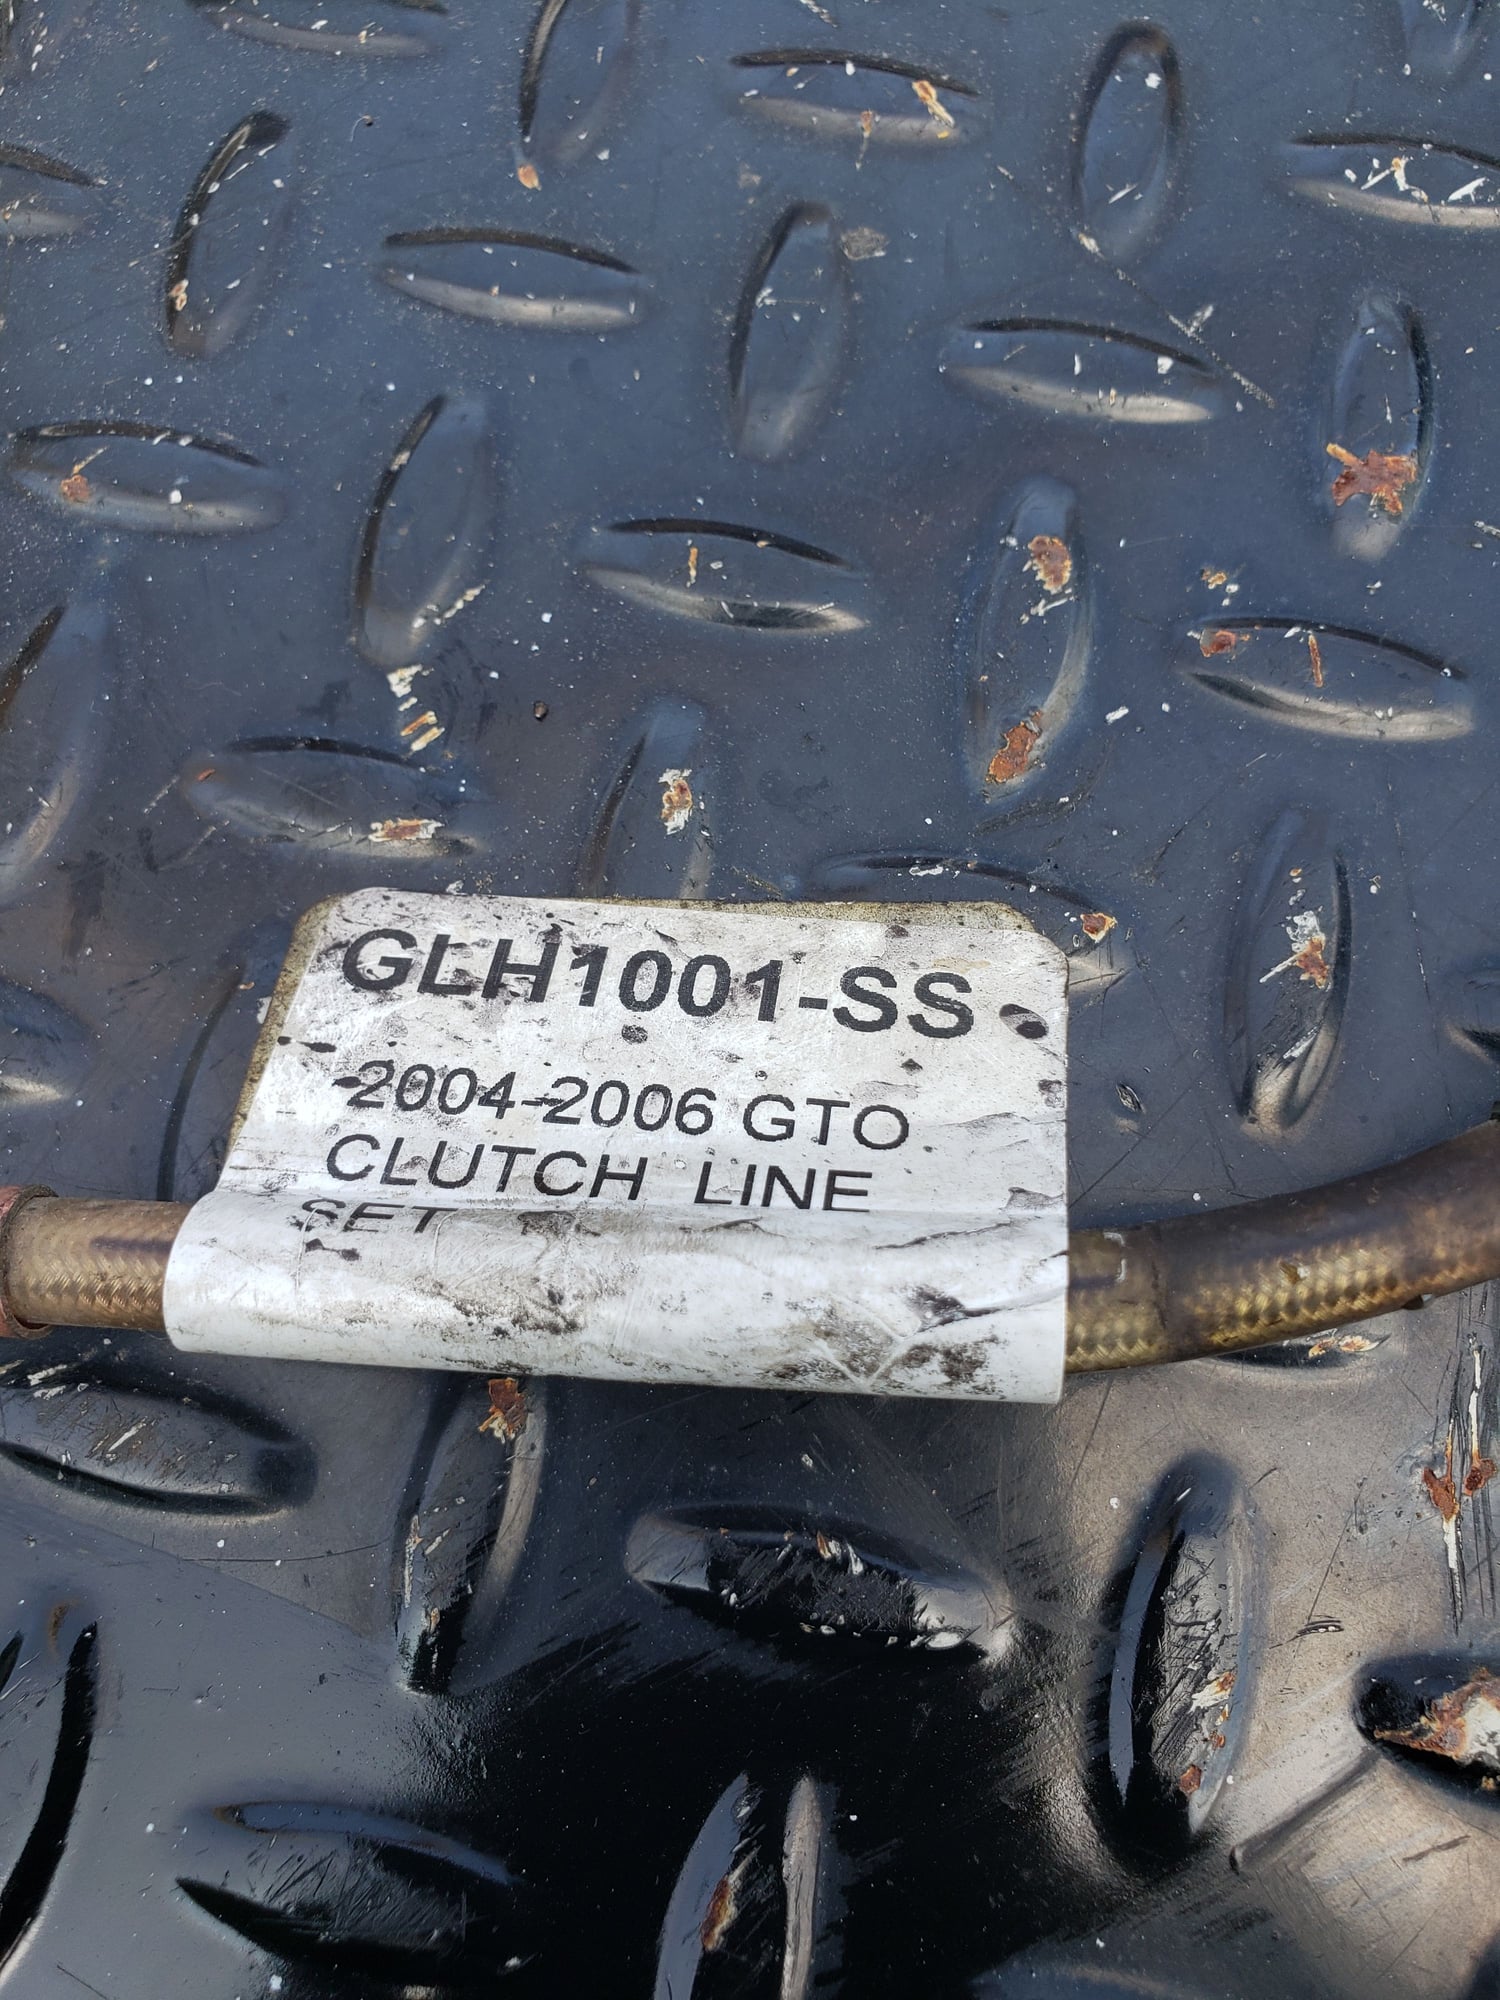  - 2004 gto clutch line braided - Flat Rock, MI 48134, United States